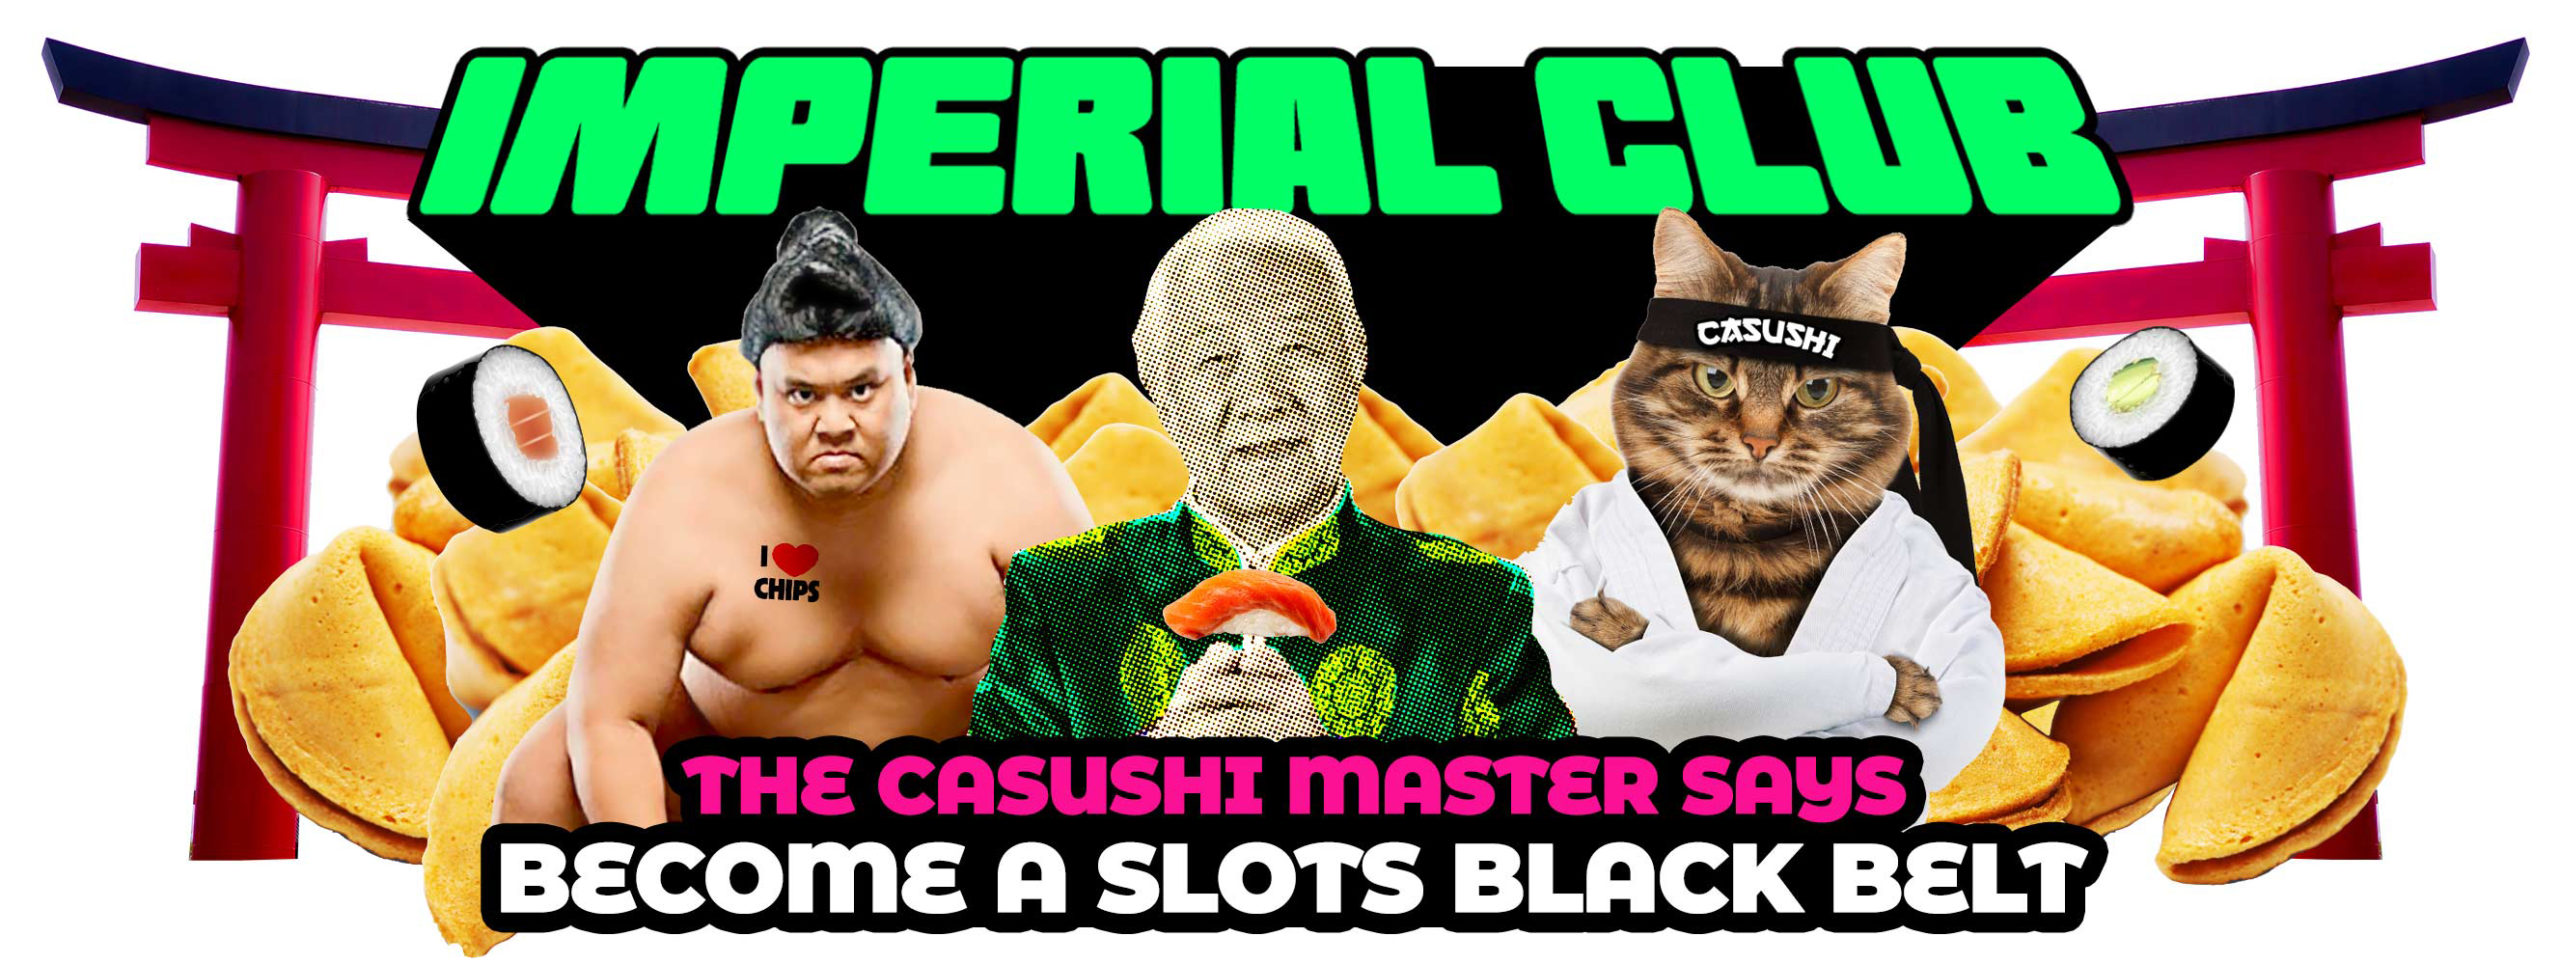 Imperial club Casushi